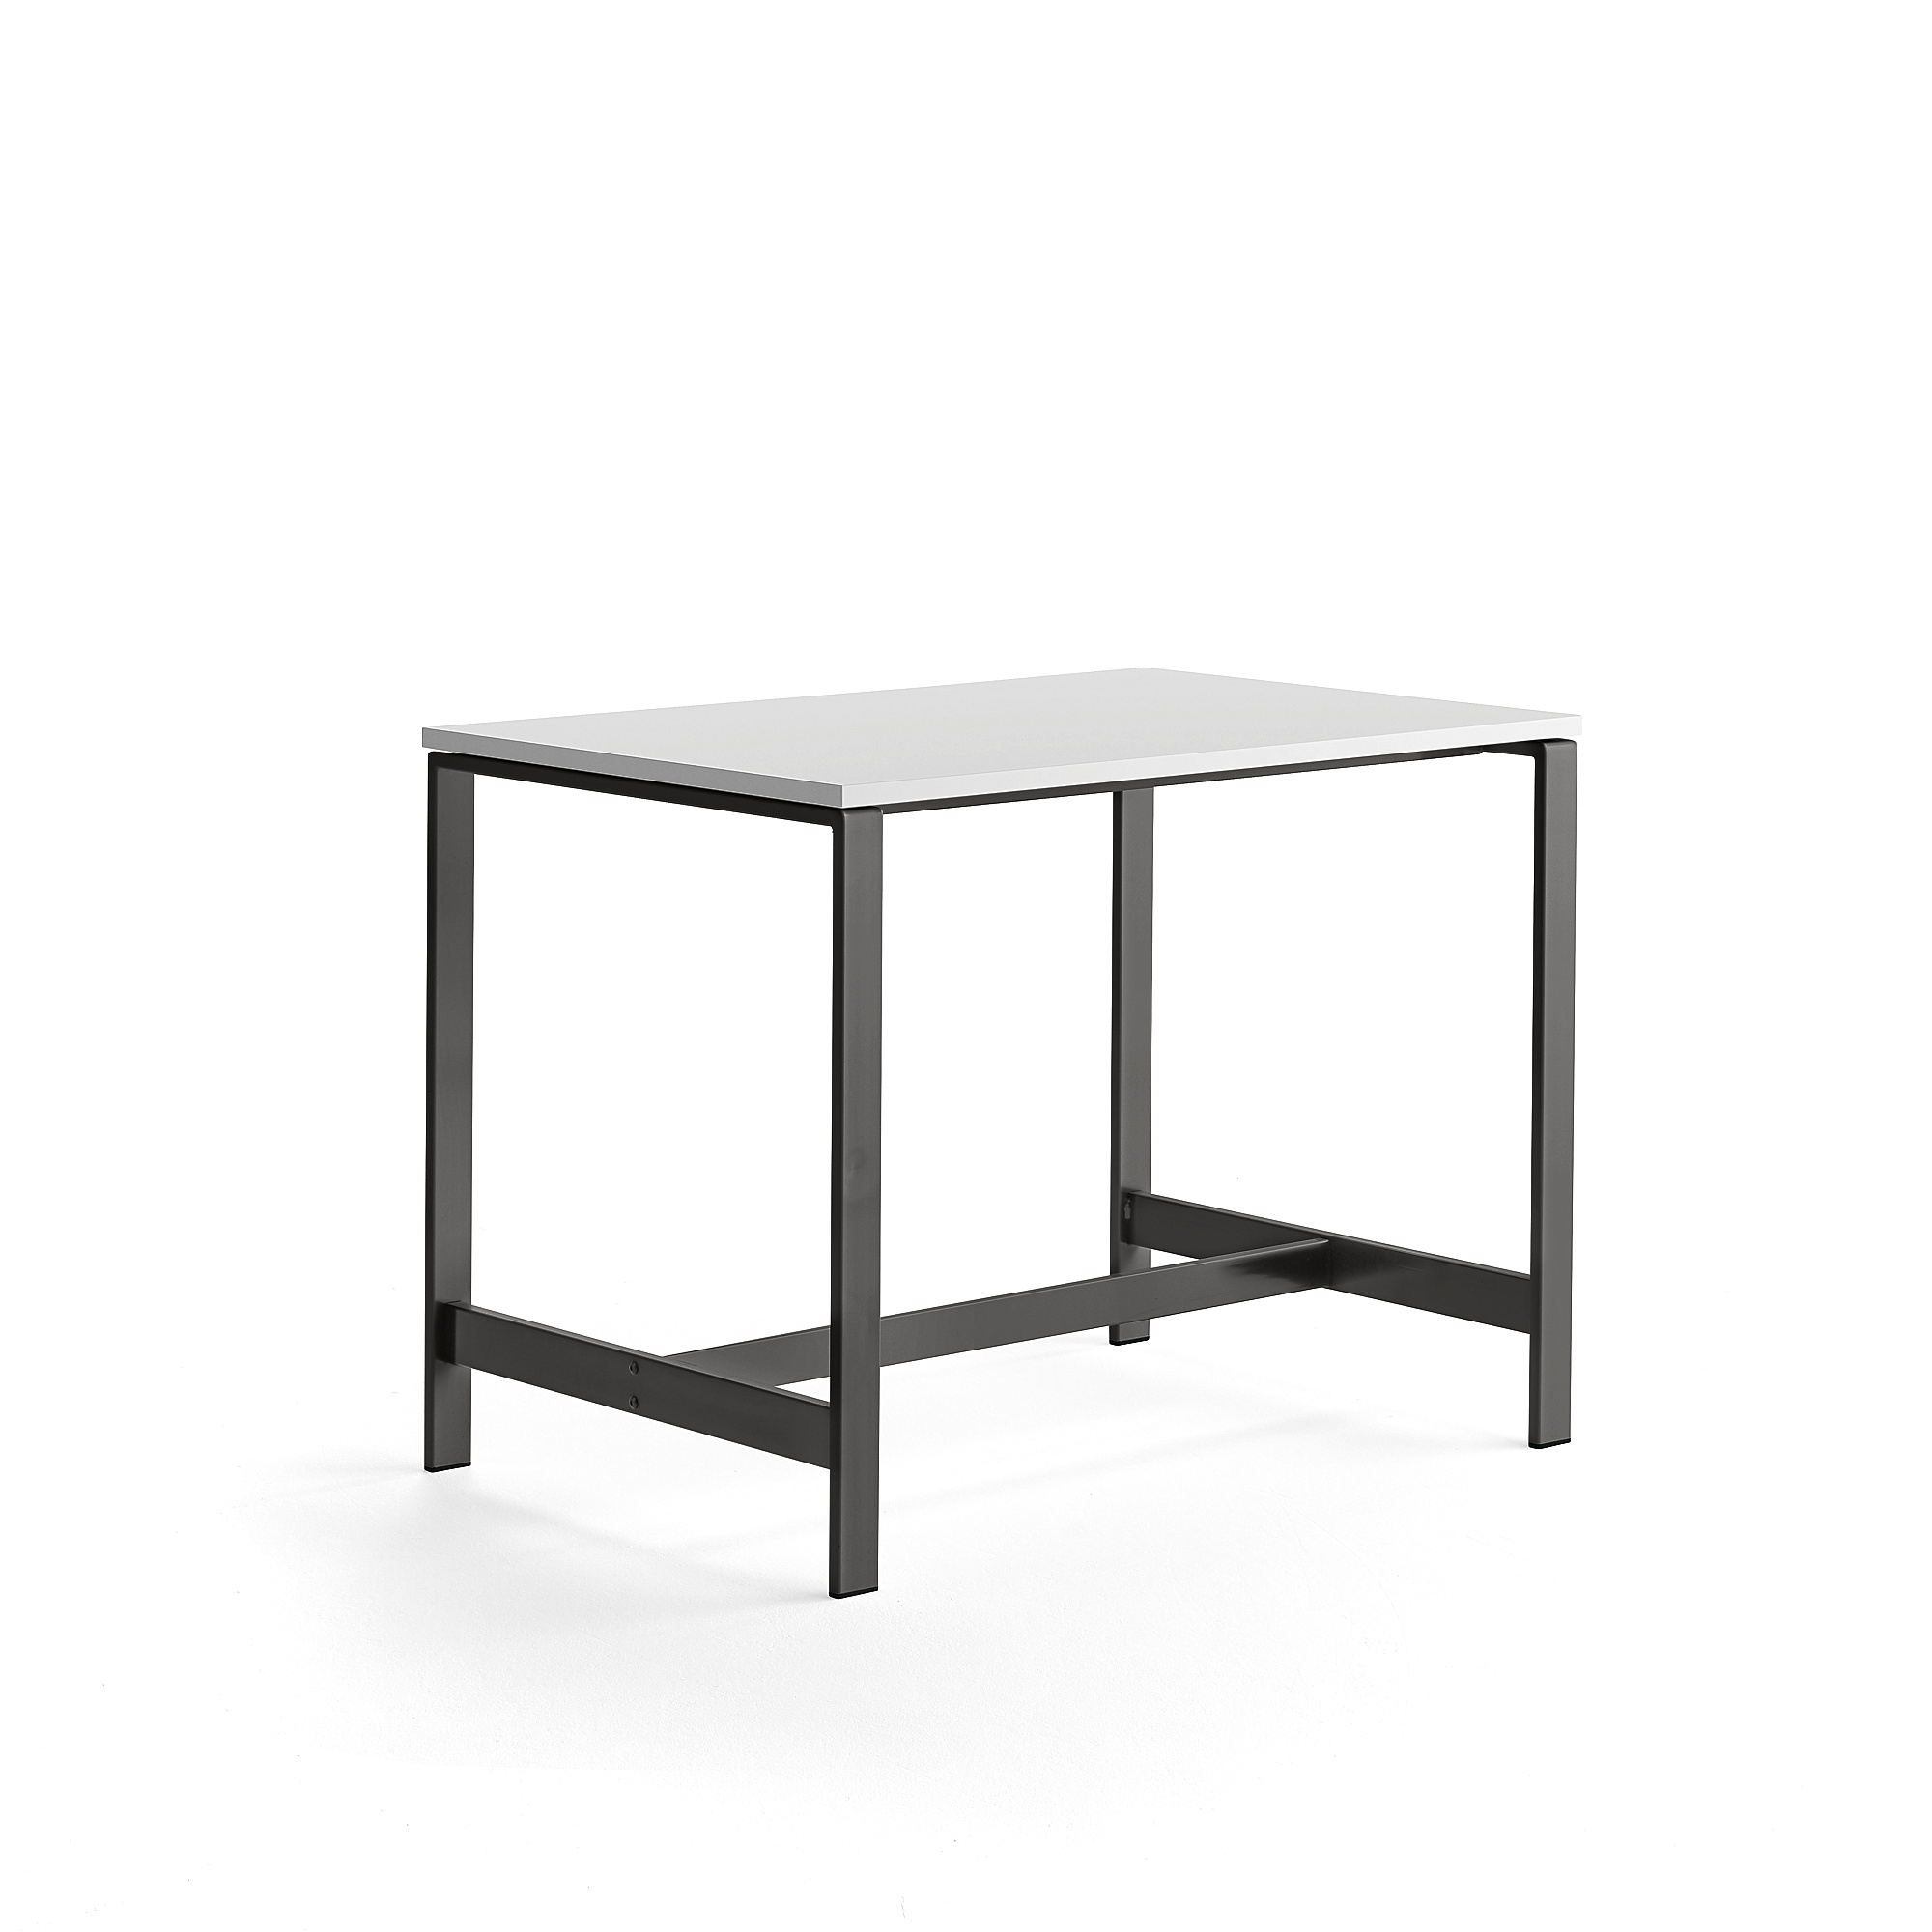 Stůl VARIOUS, 1200x800 mm, výška 900 mm, černé nohy, bílá